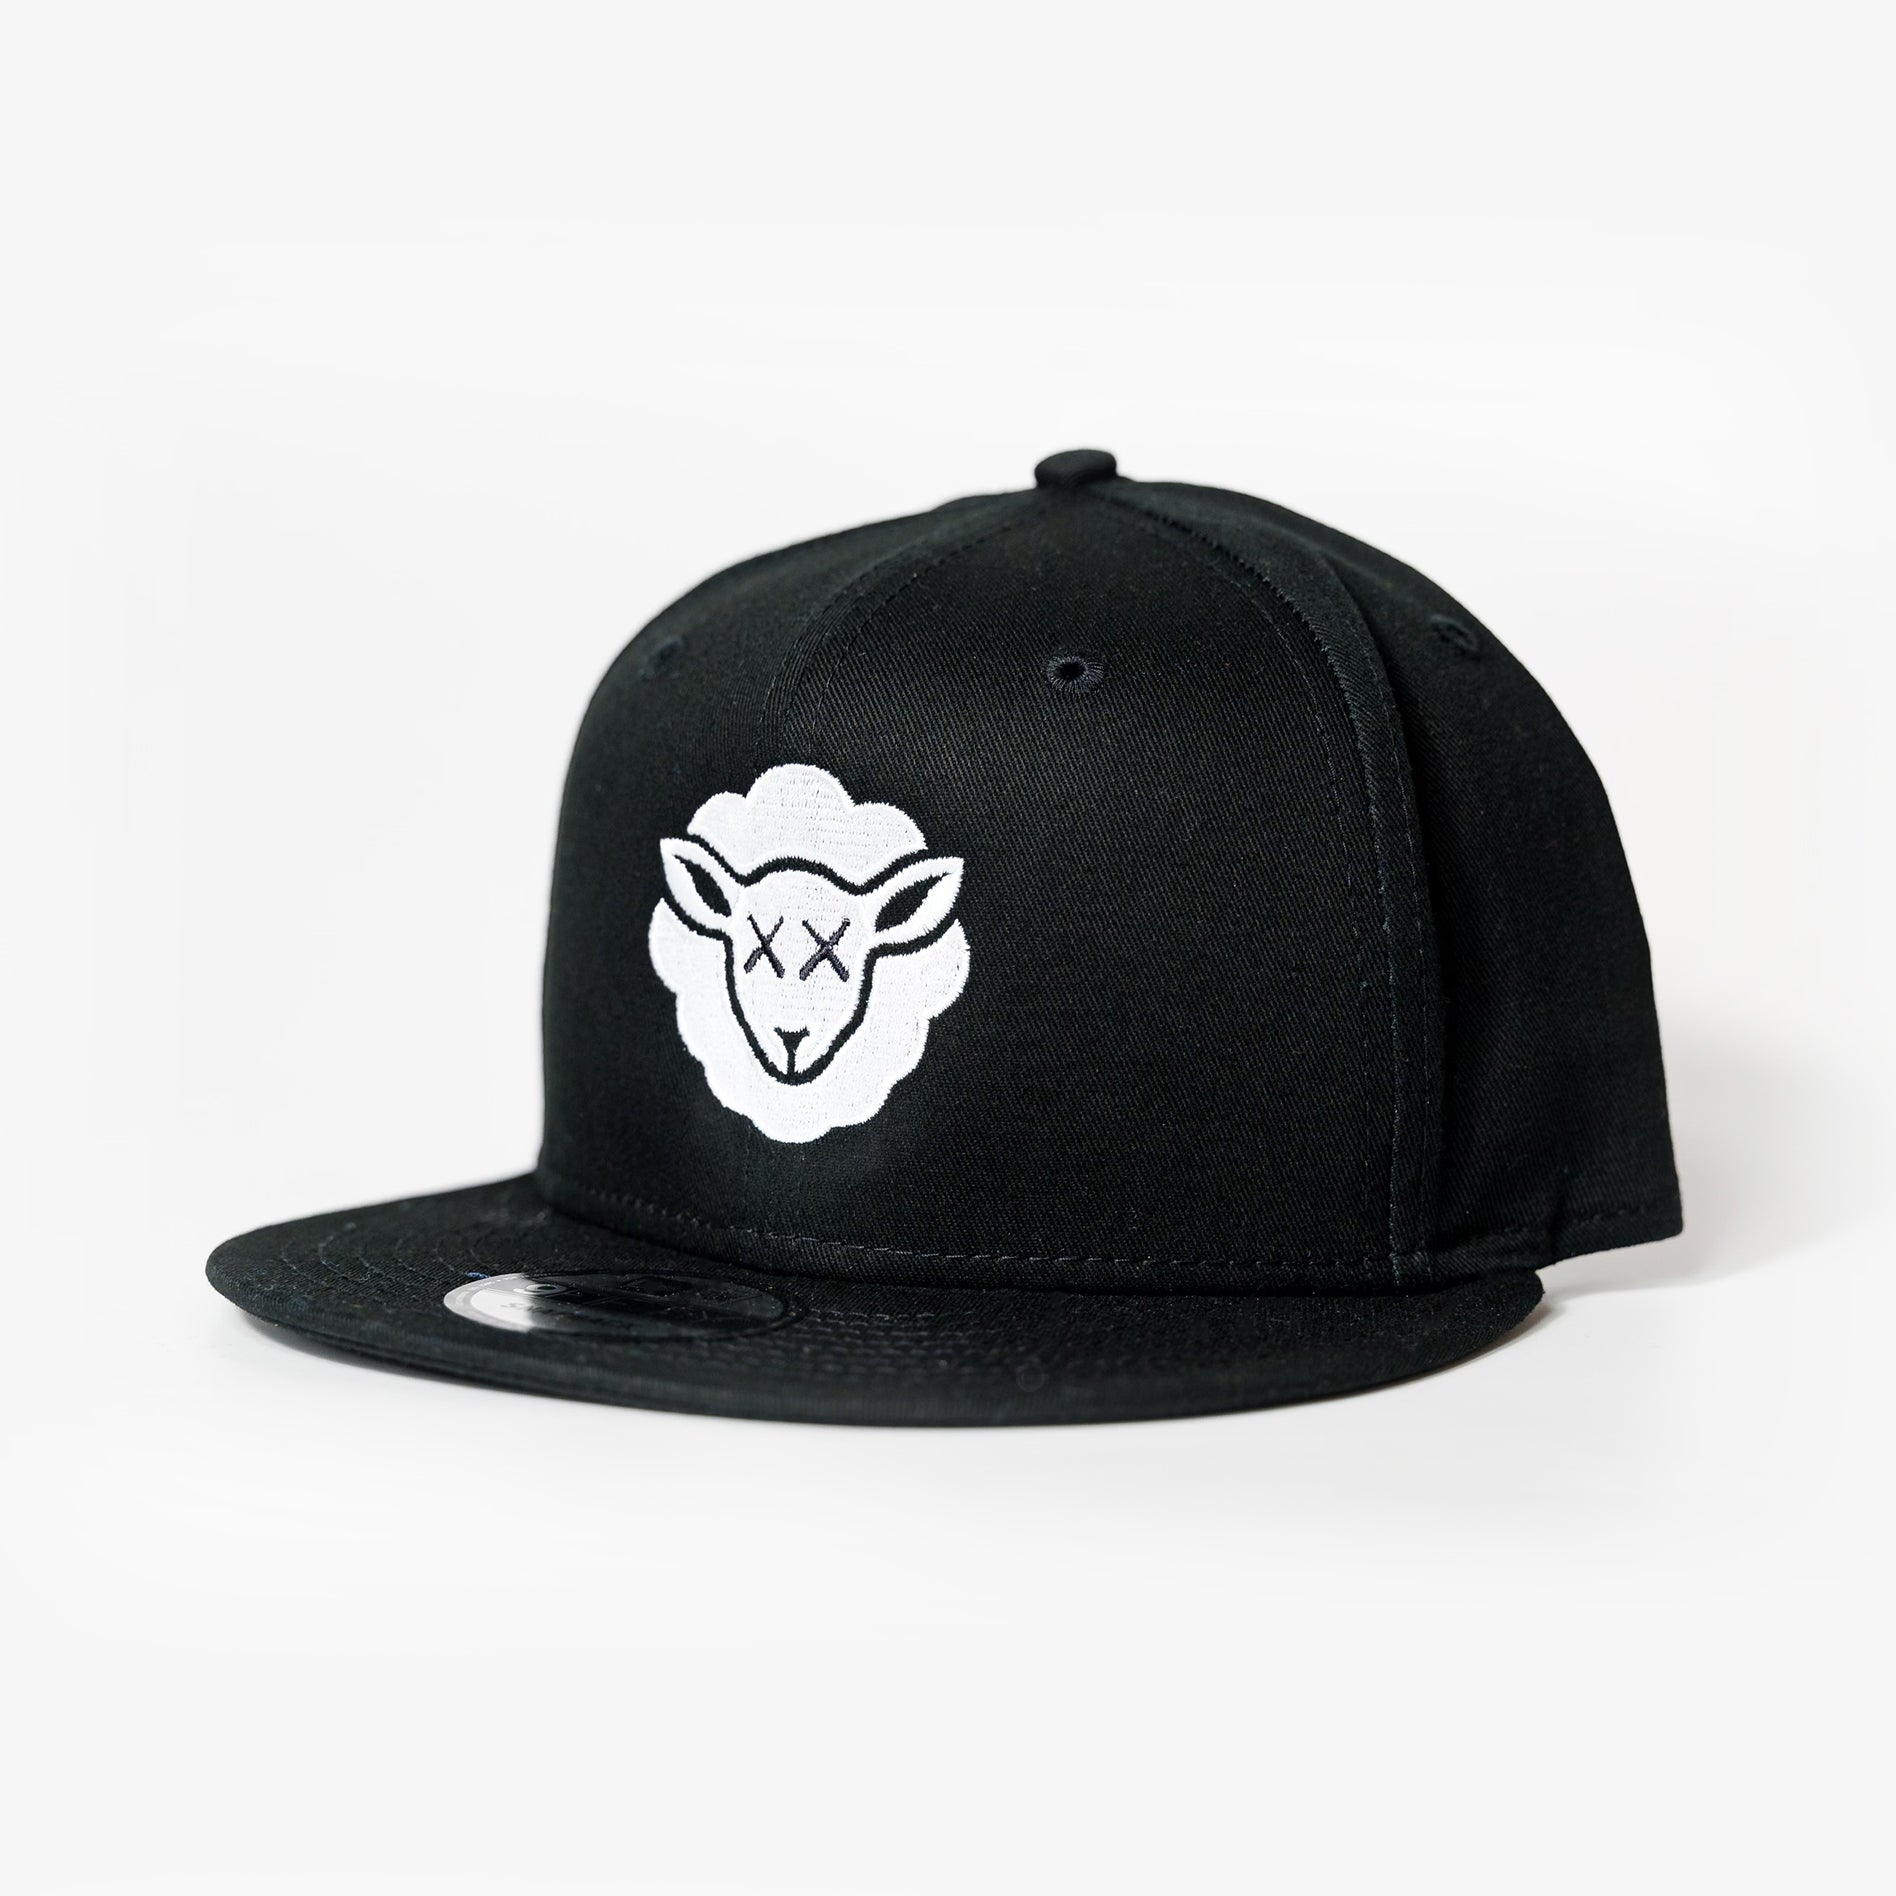 SHEEPEY Staple New Era Hat Black